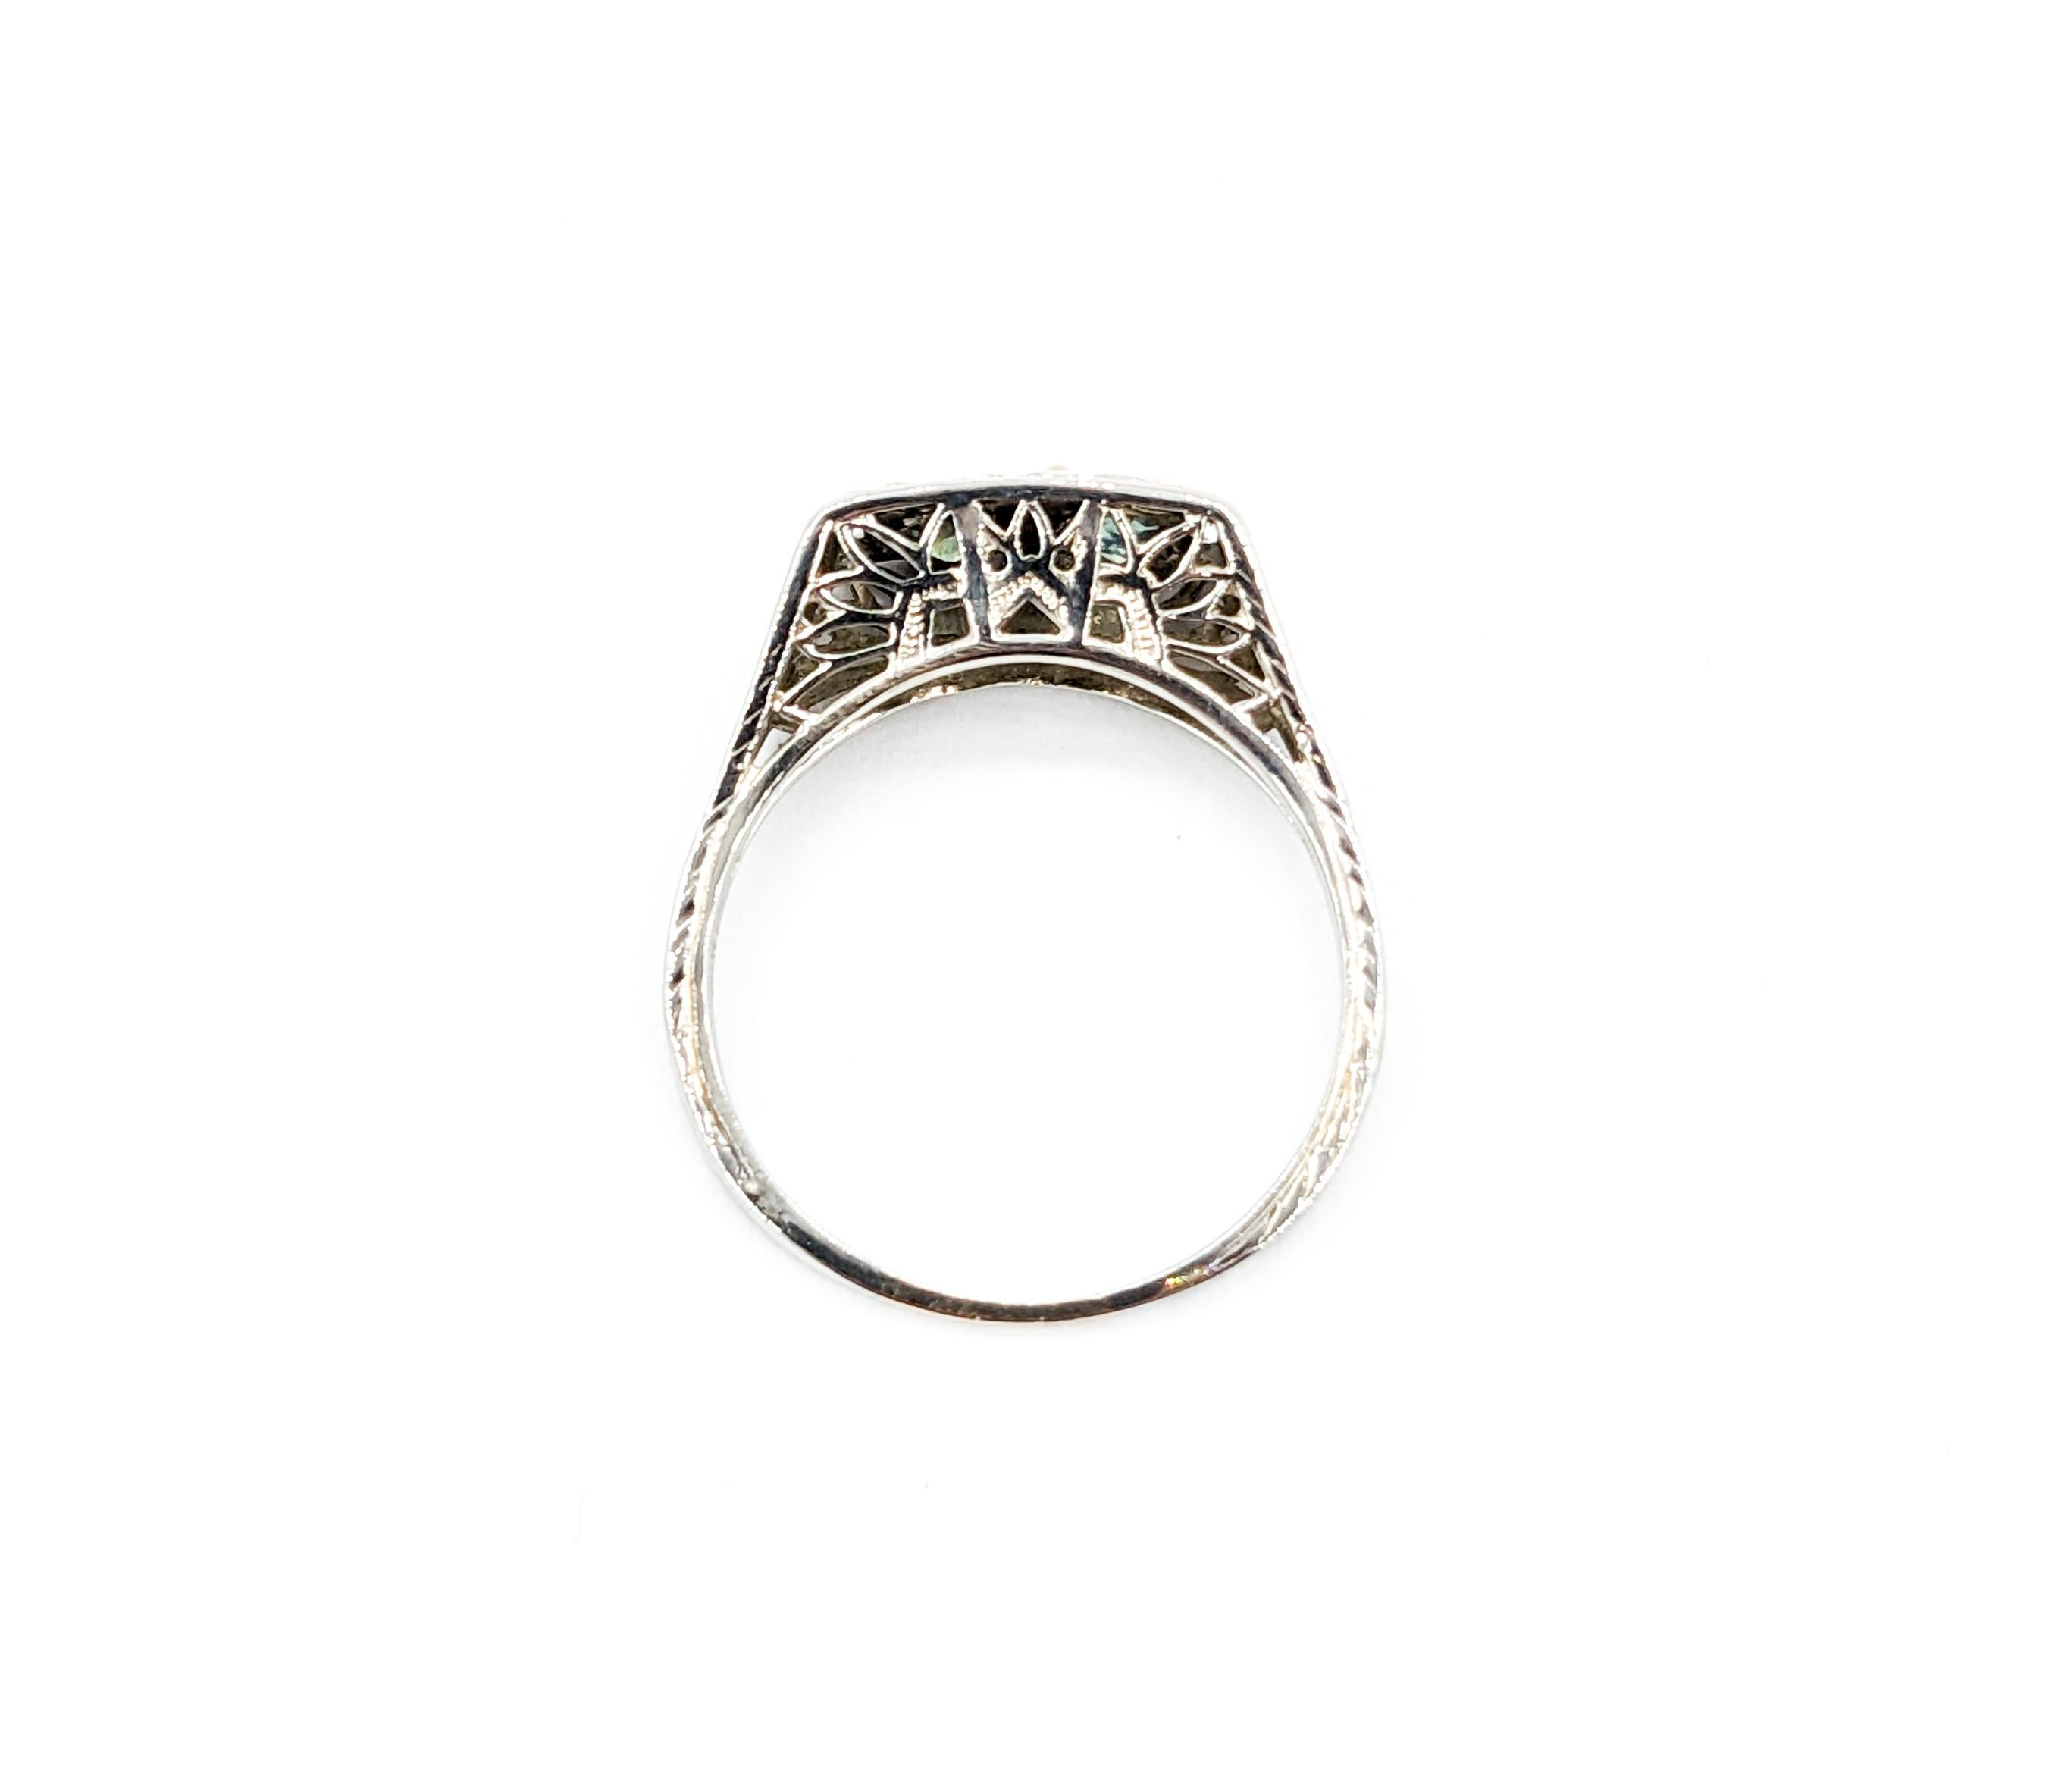 Wonderful Art Deco Color Change Alexandrite Ring in 18Kt White Gold 4